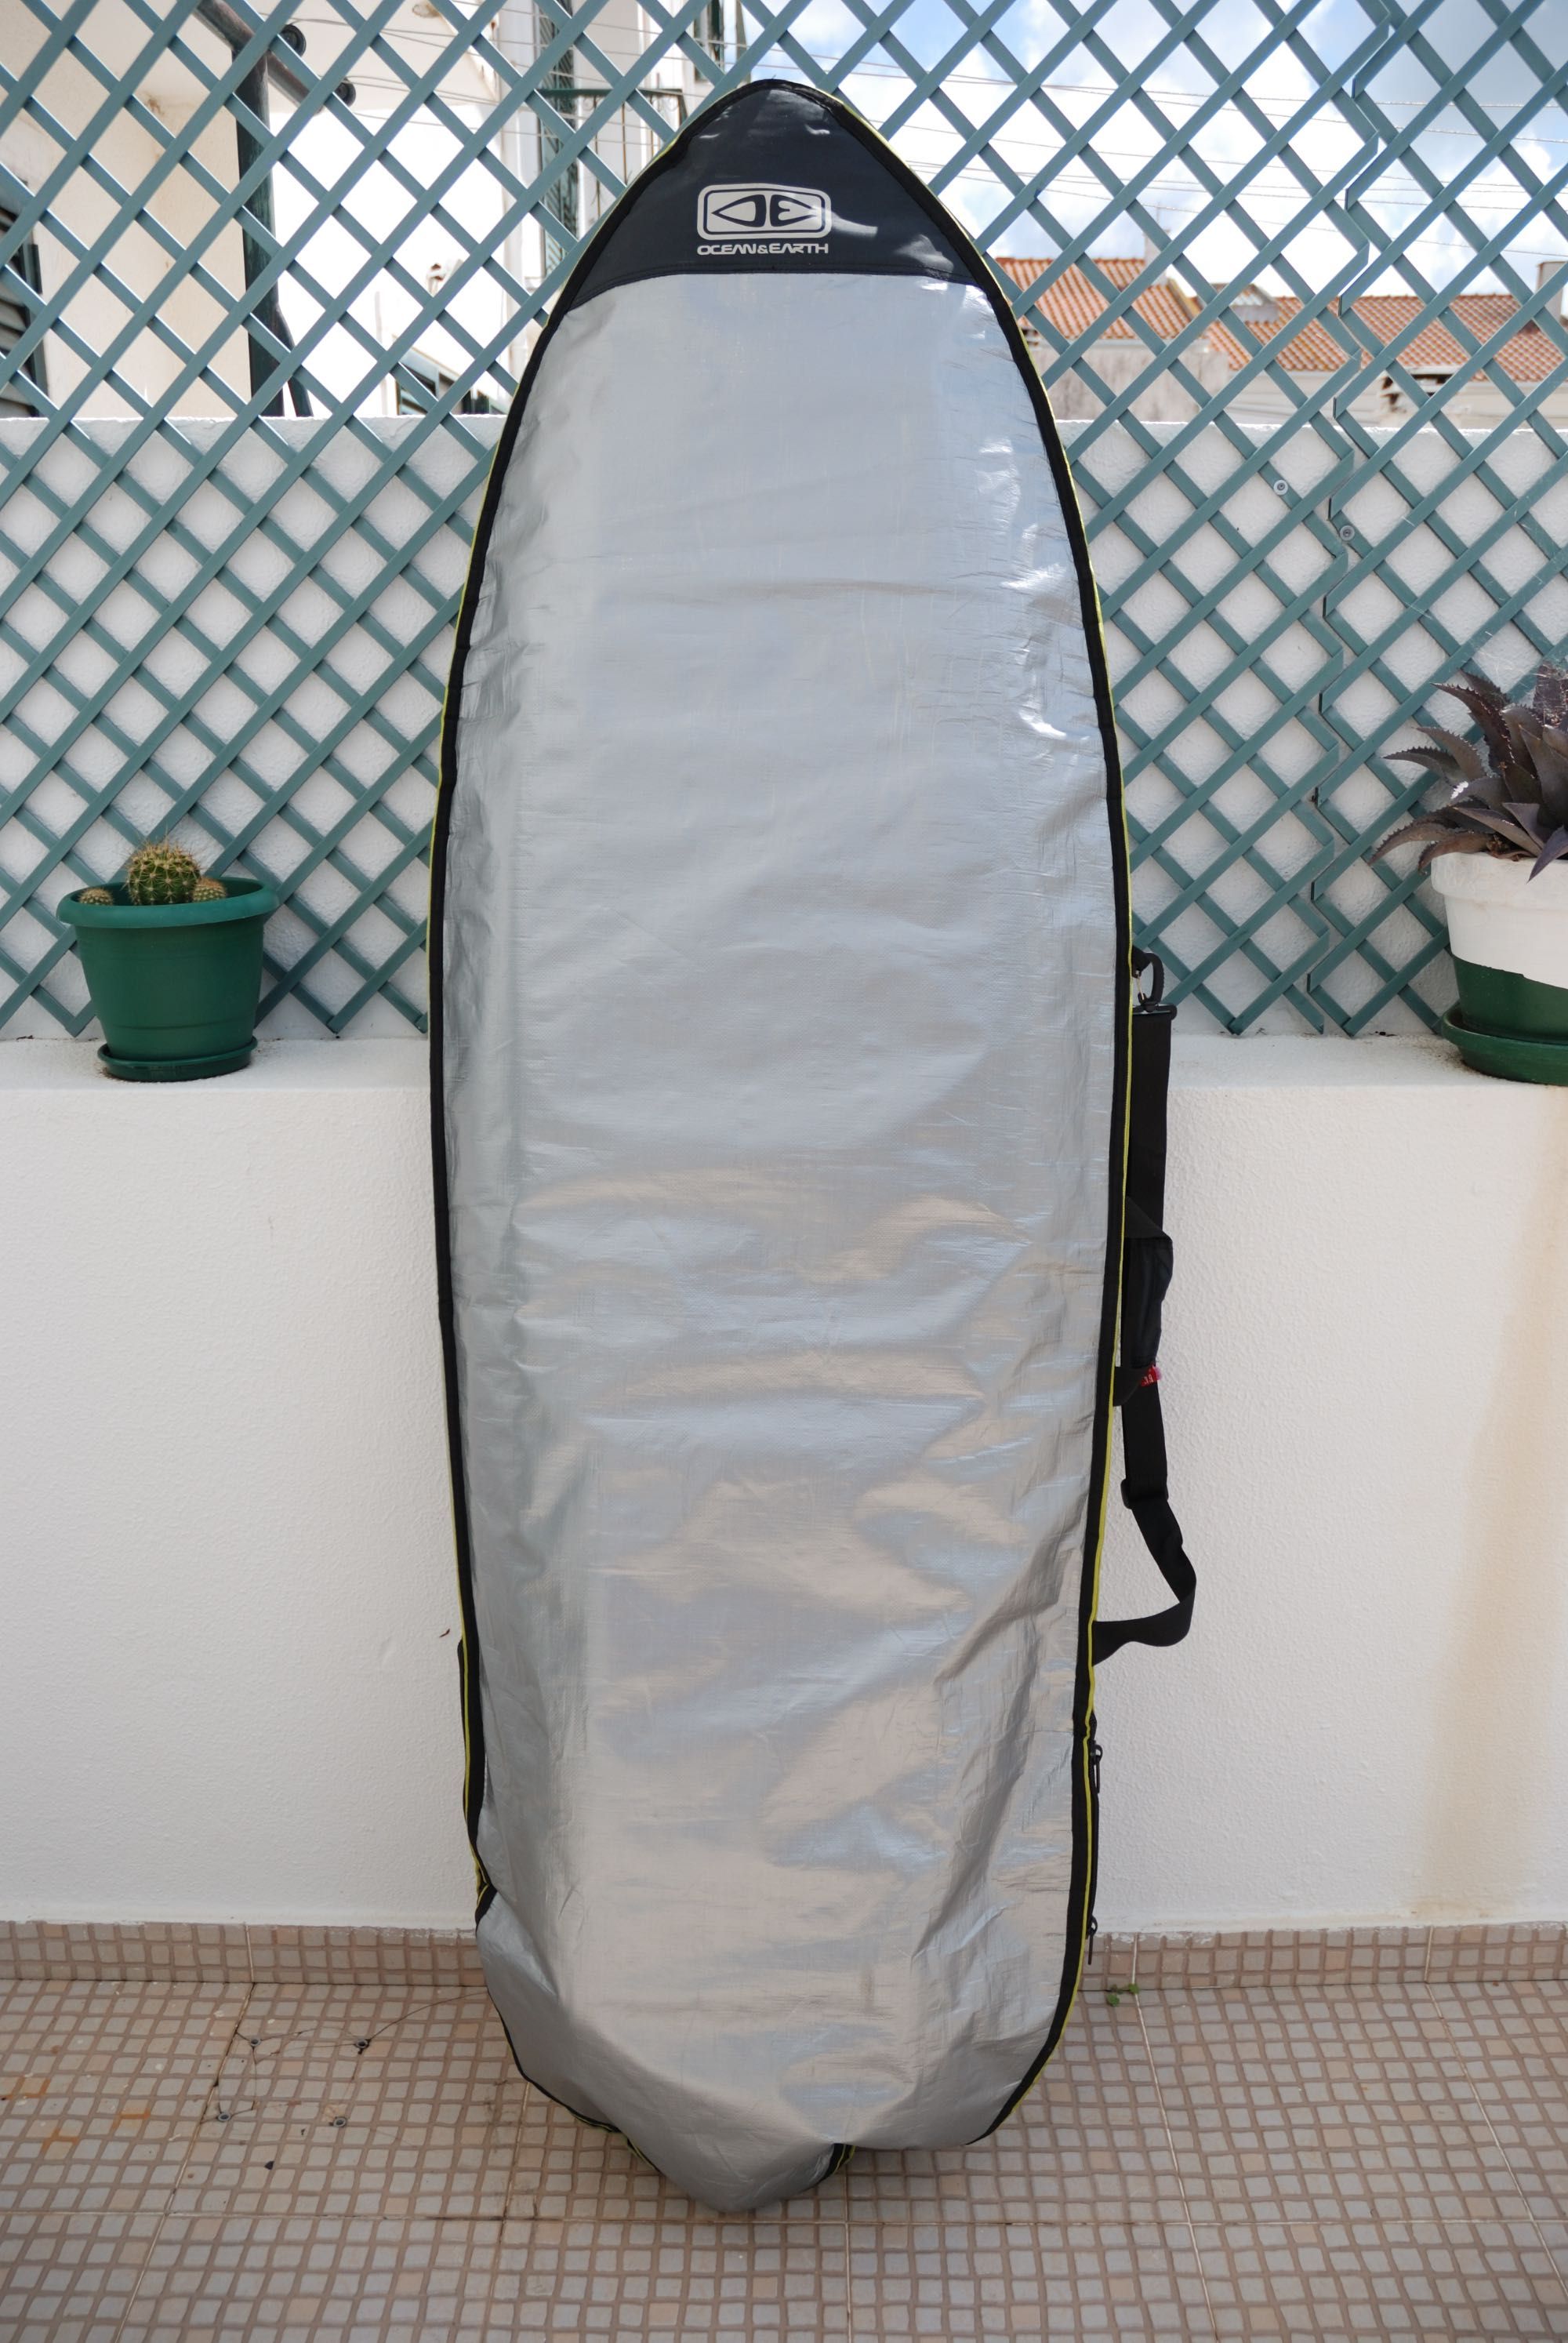 Prancha Surf Hibrida 6'4 c/ Deck Grip + Quilhas + Saco + Leach